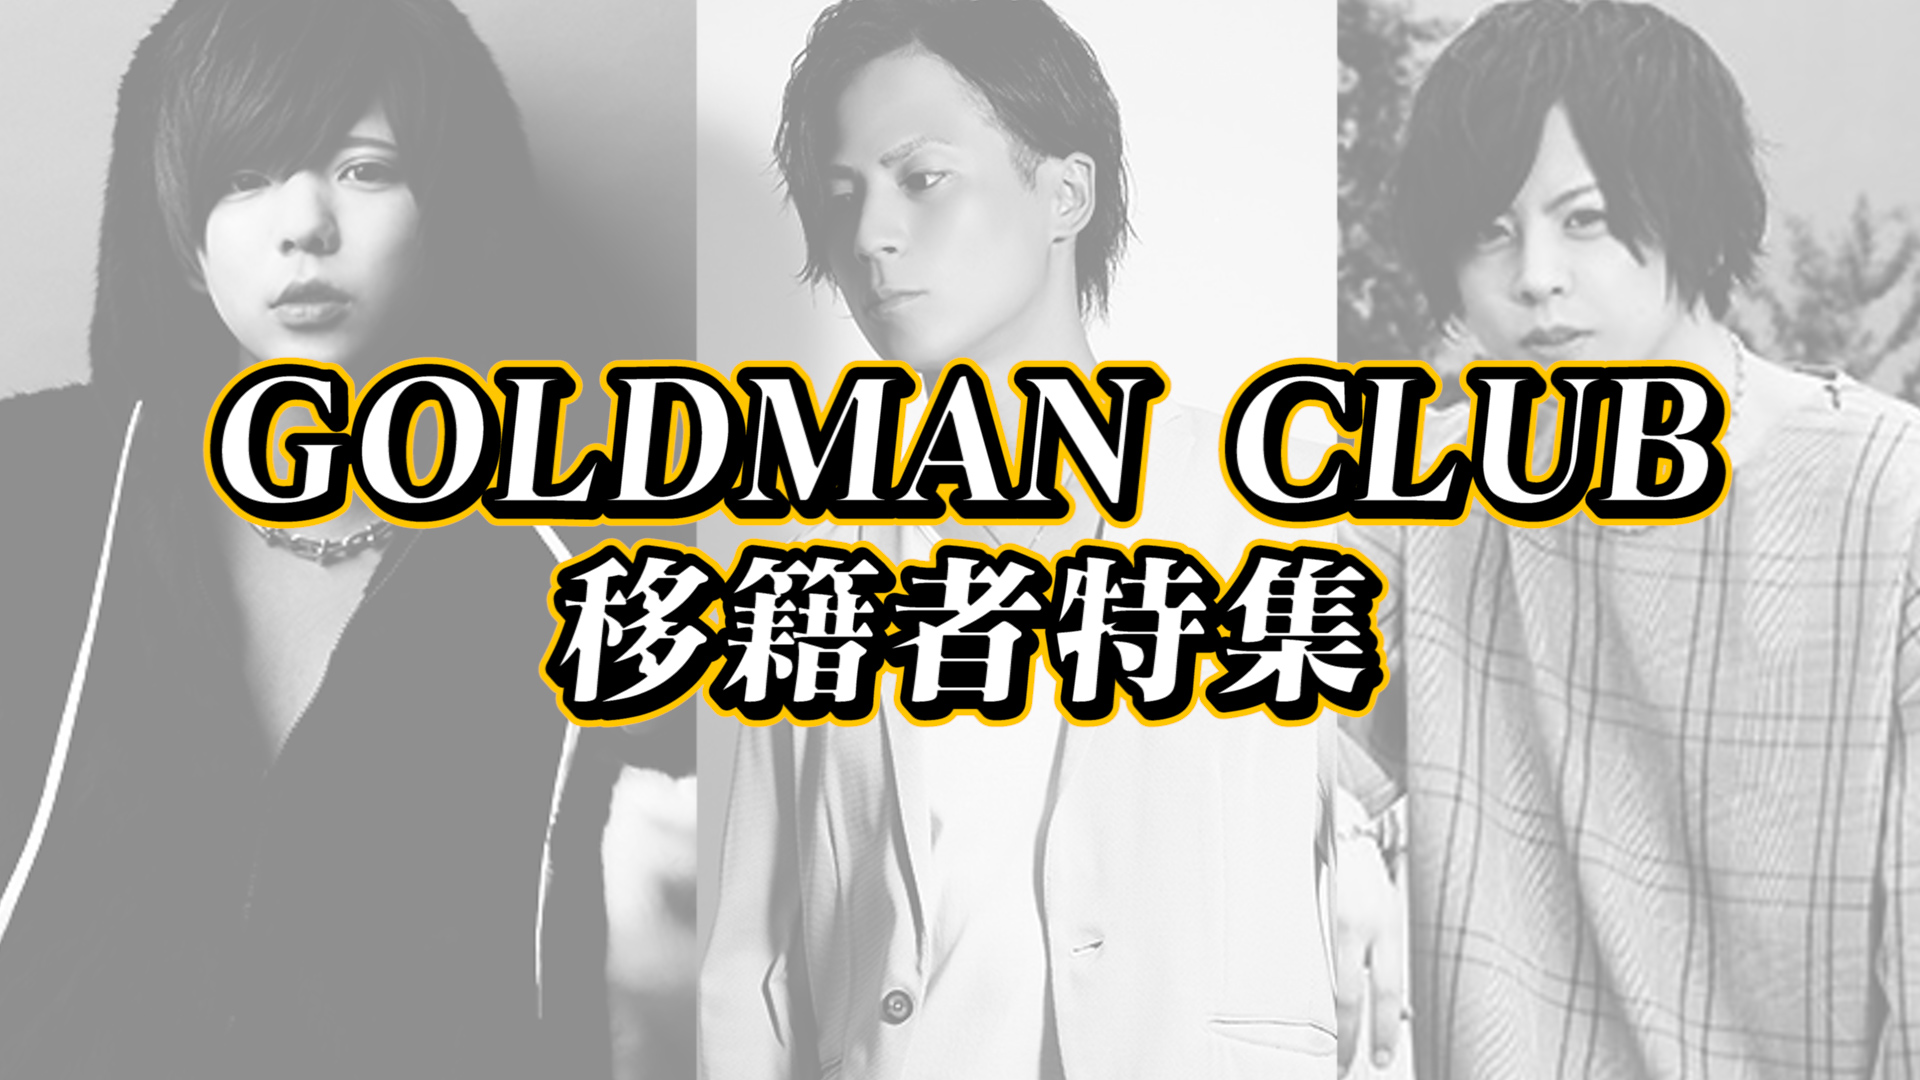 GOLDMAN CLUB 移籍者特集